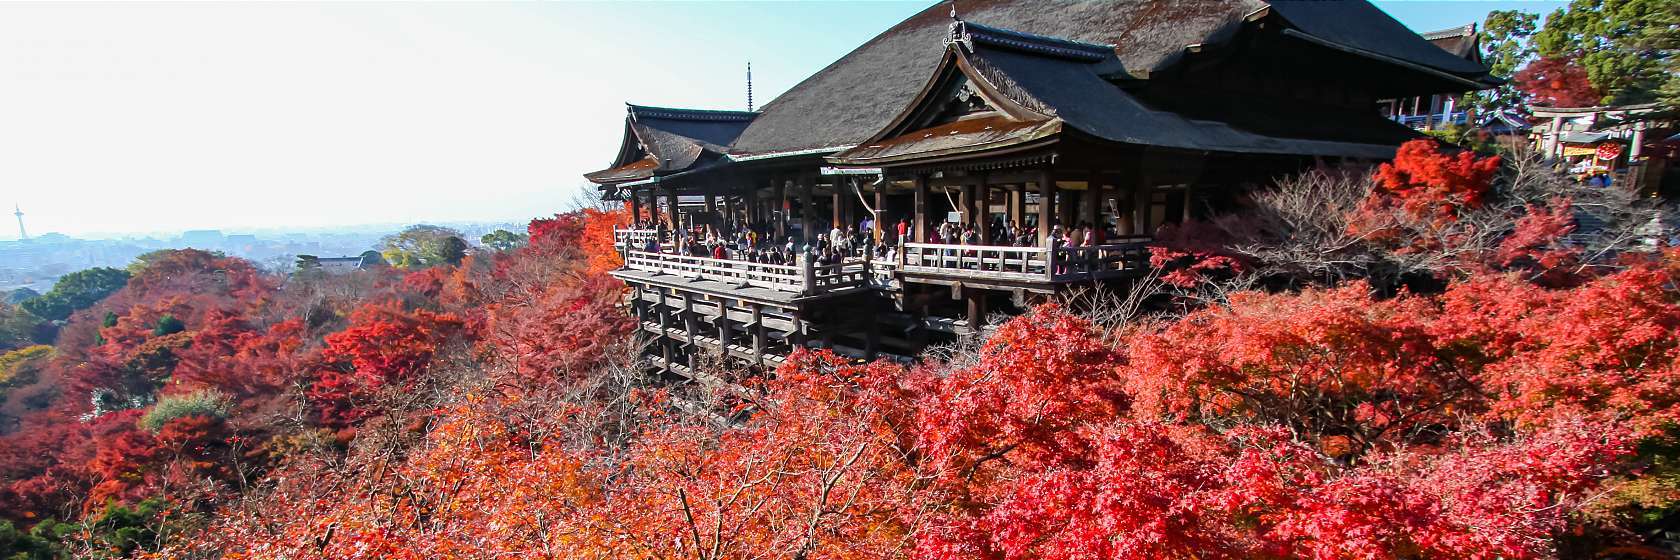 image of Kyoto